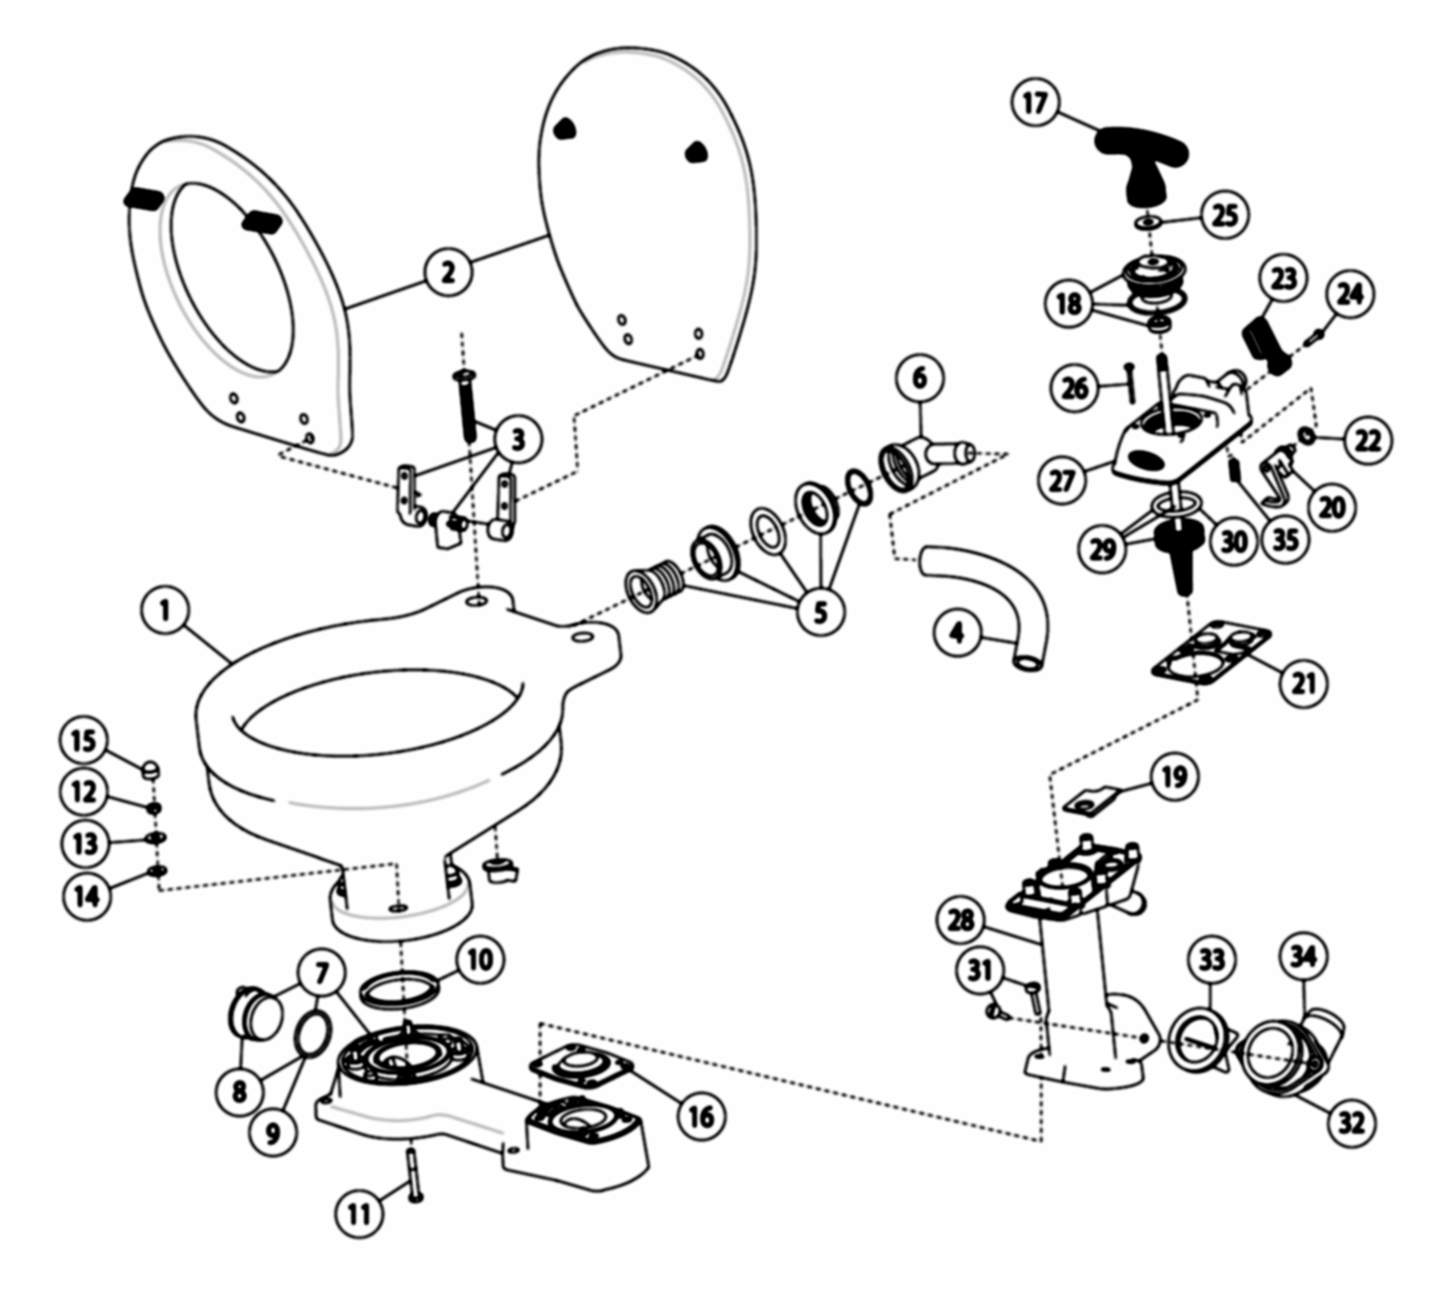 jabsco toilet manual pdf